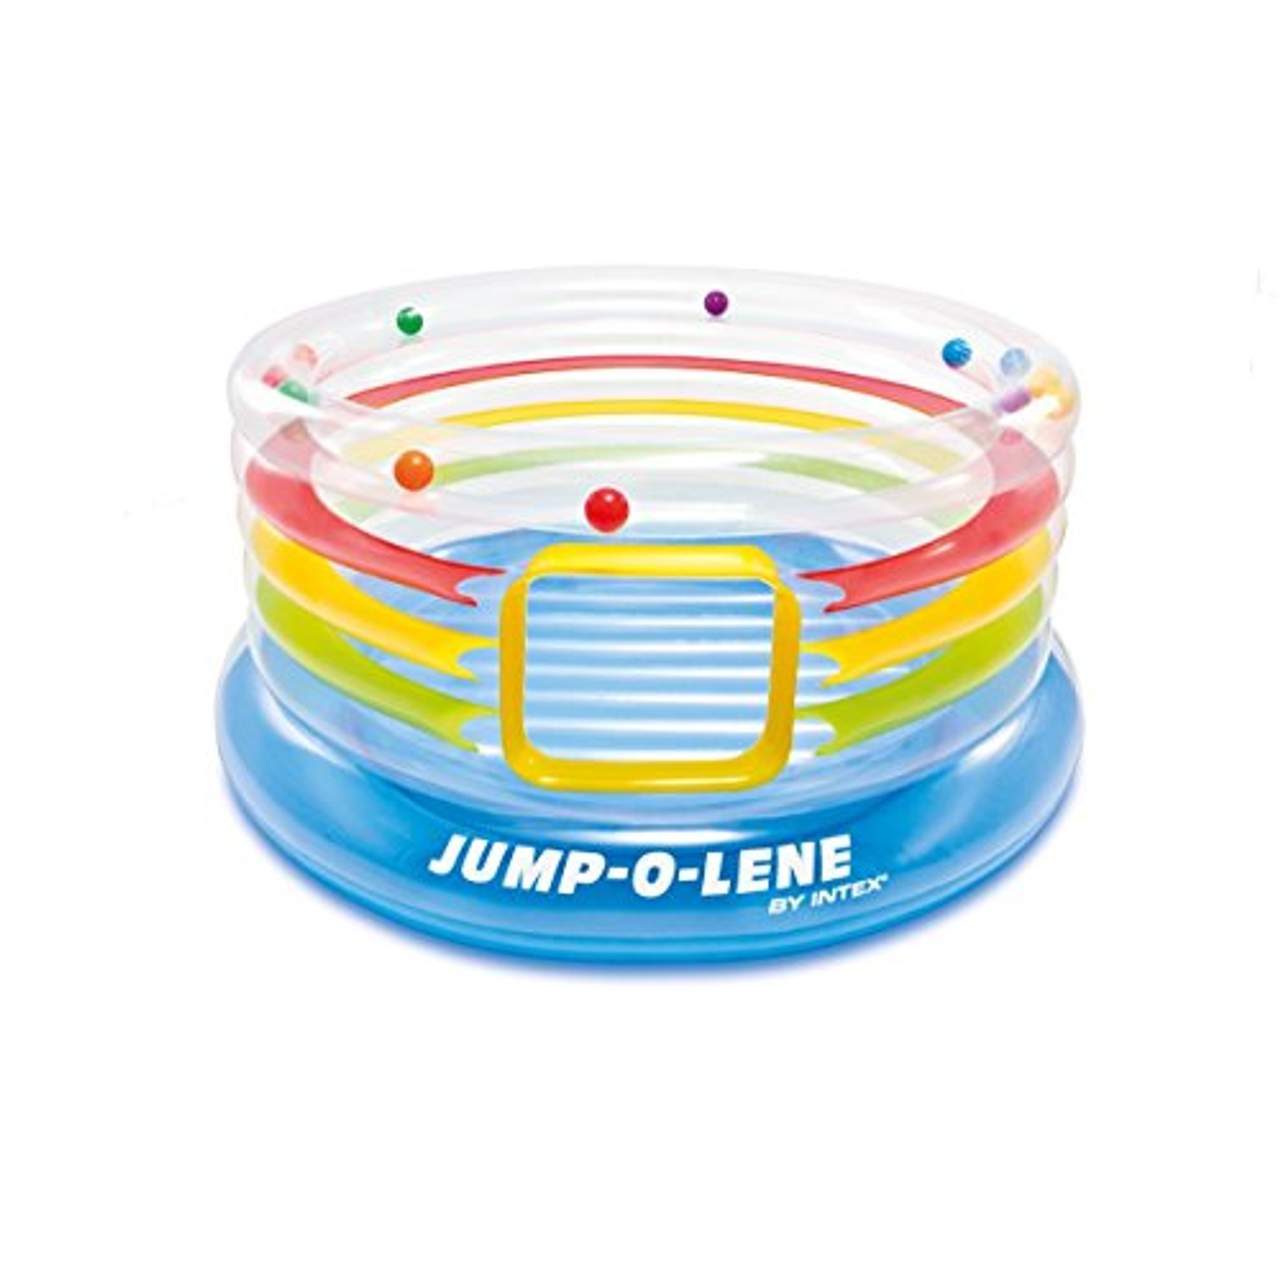 Intex Jump-O-Lene Ring Bouncer